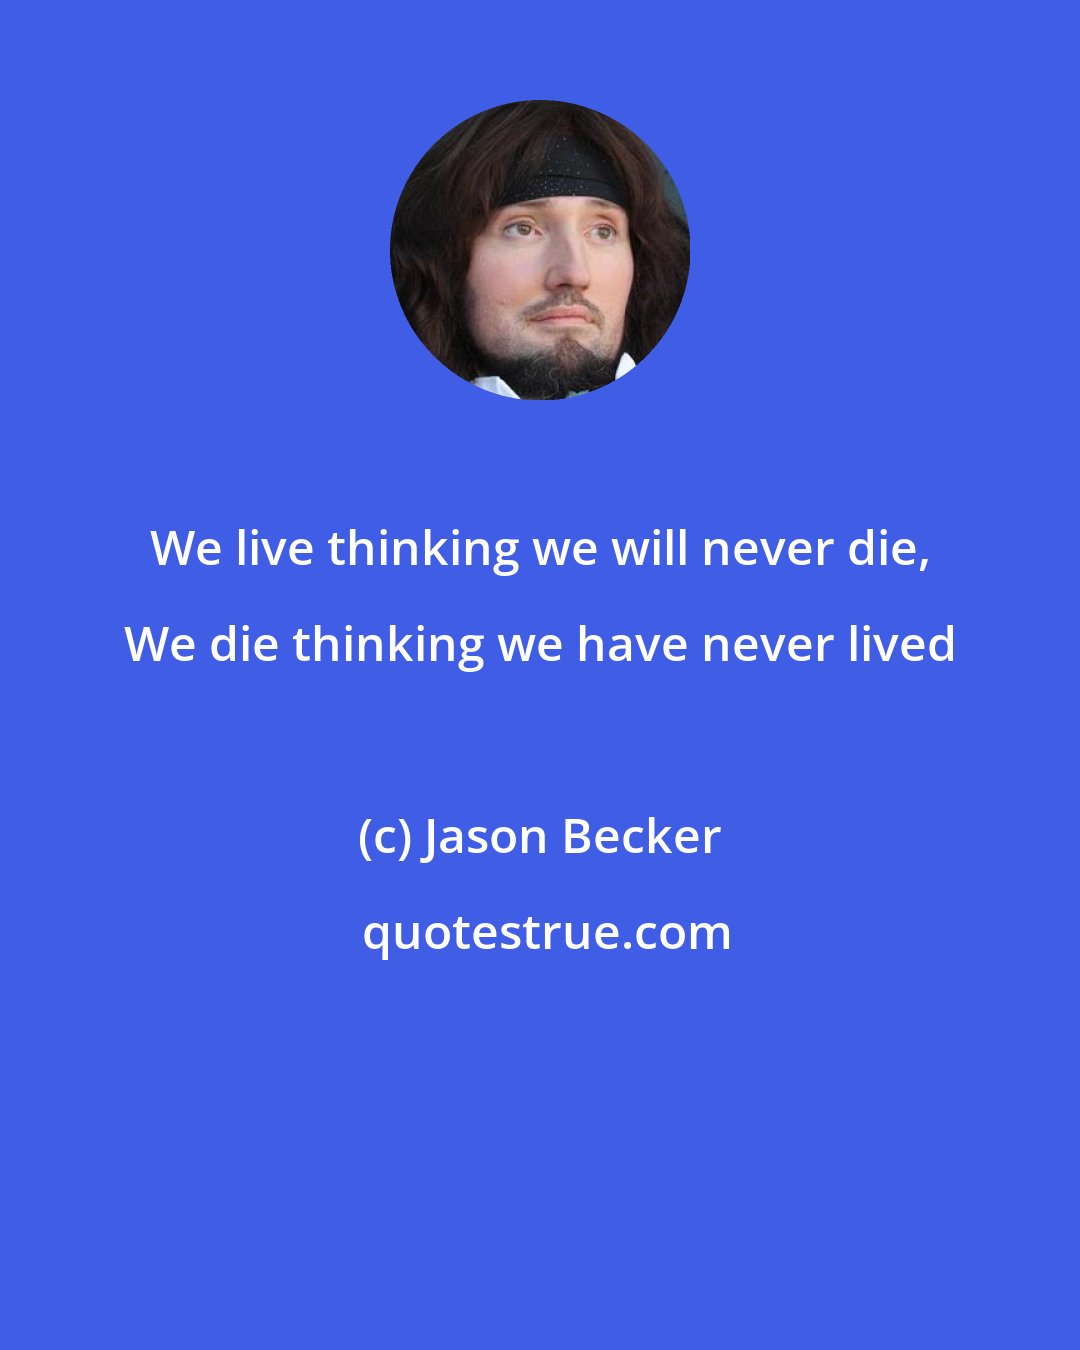 Jason Becker: We live thinking we will never die, We die thinking we have never lived